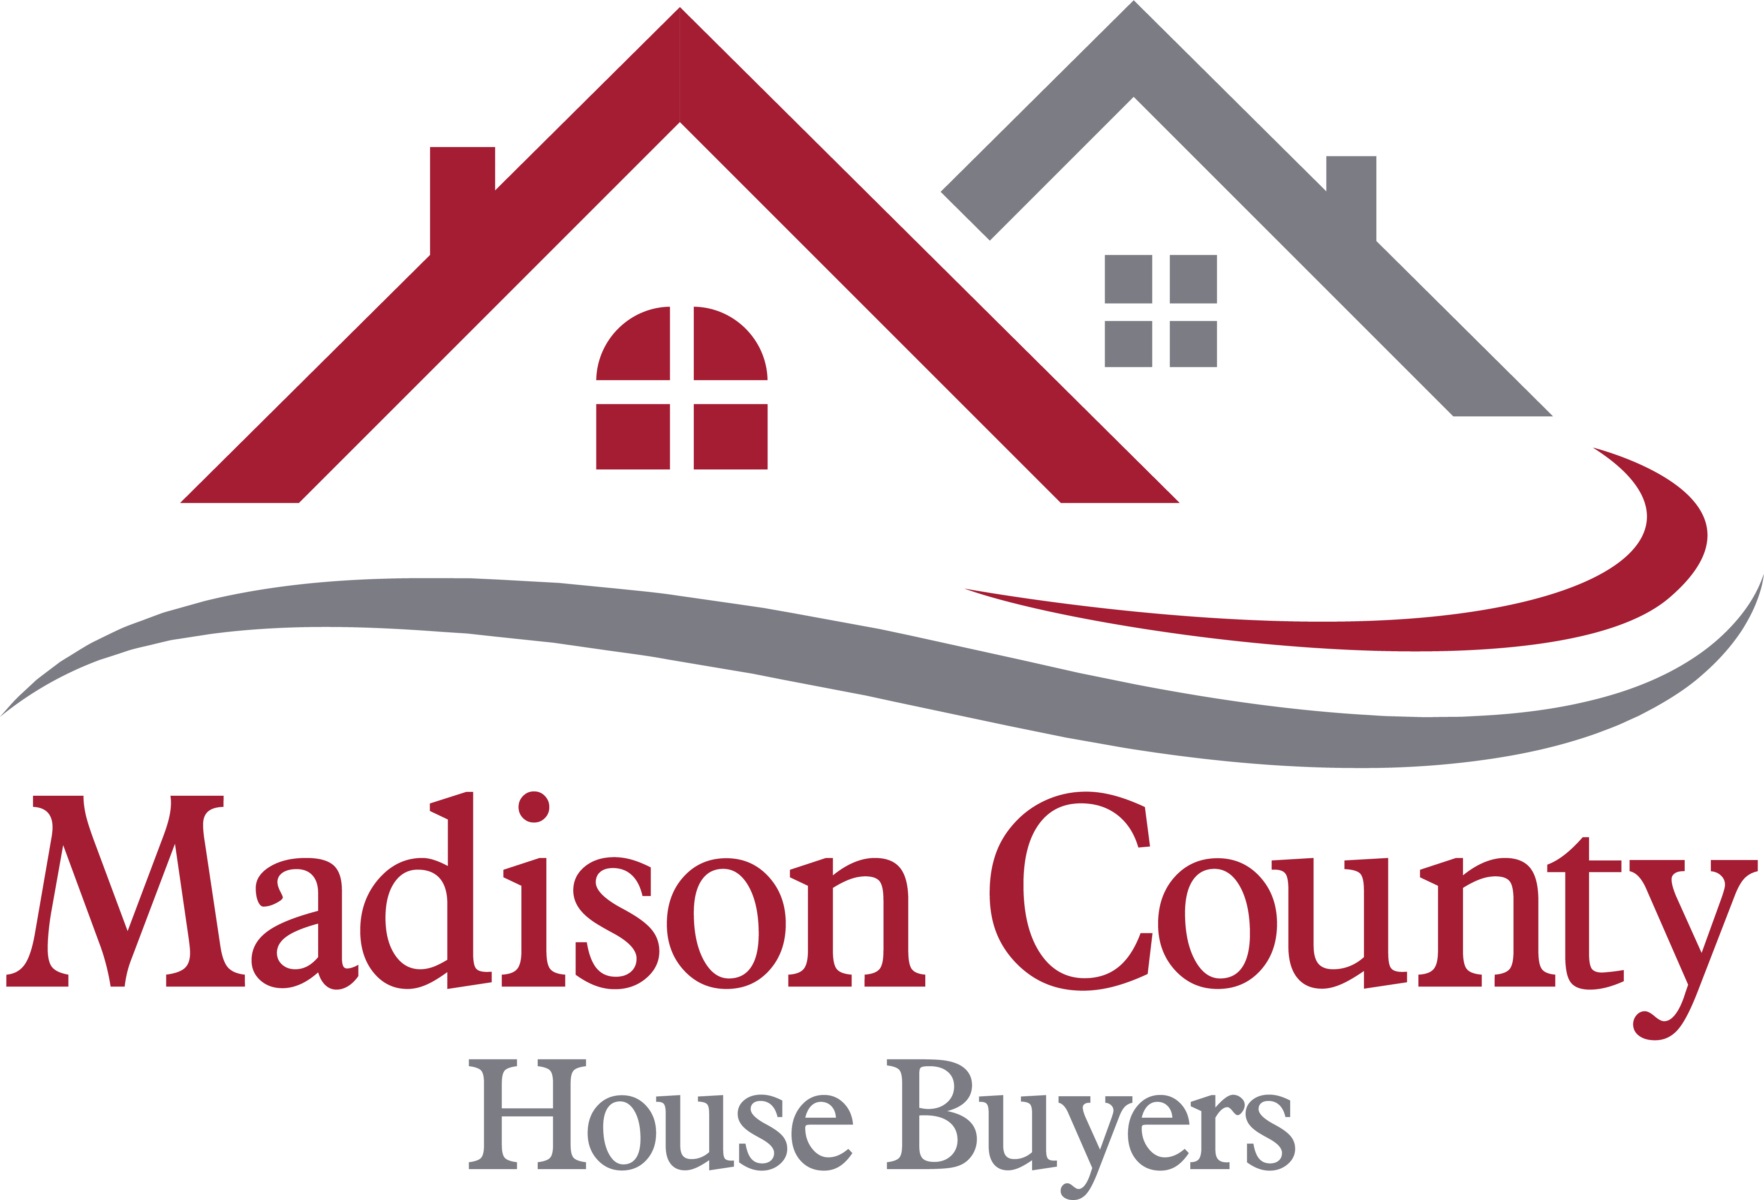 Madison County House Buyers